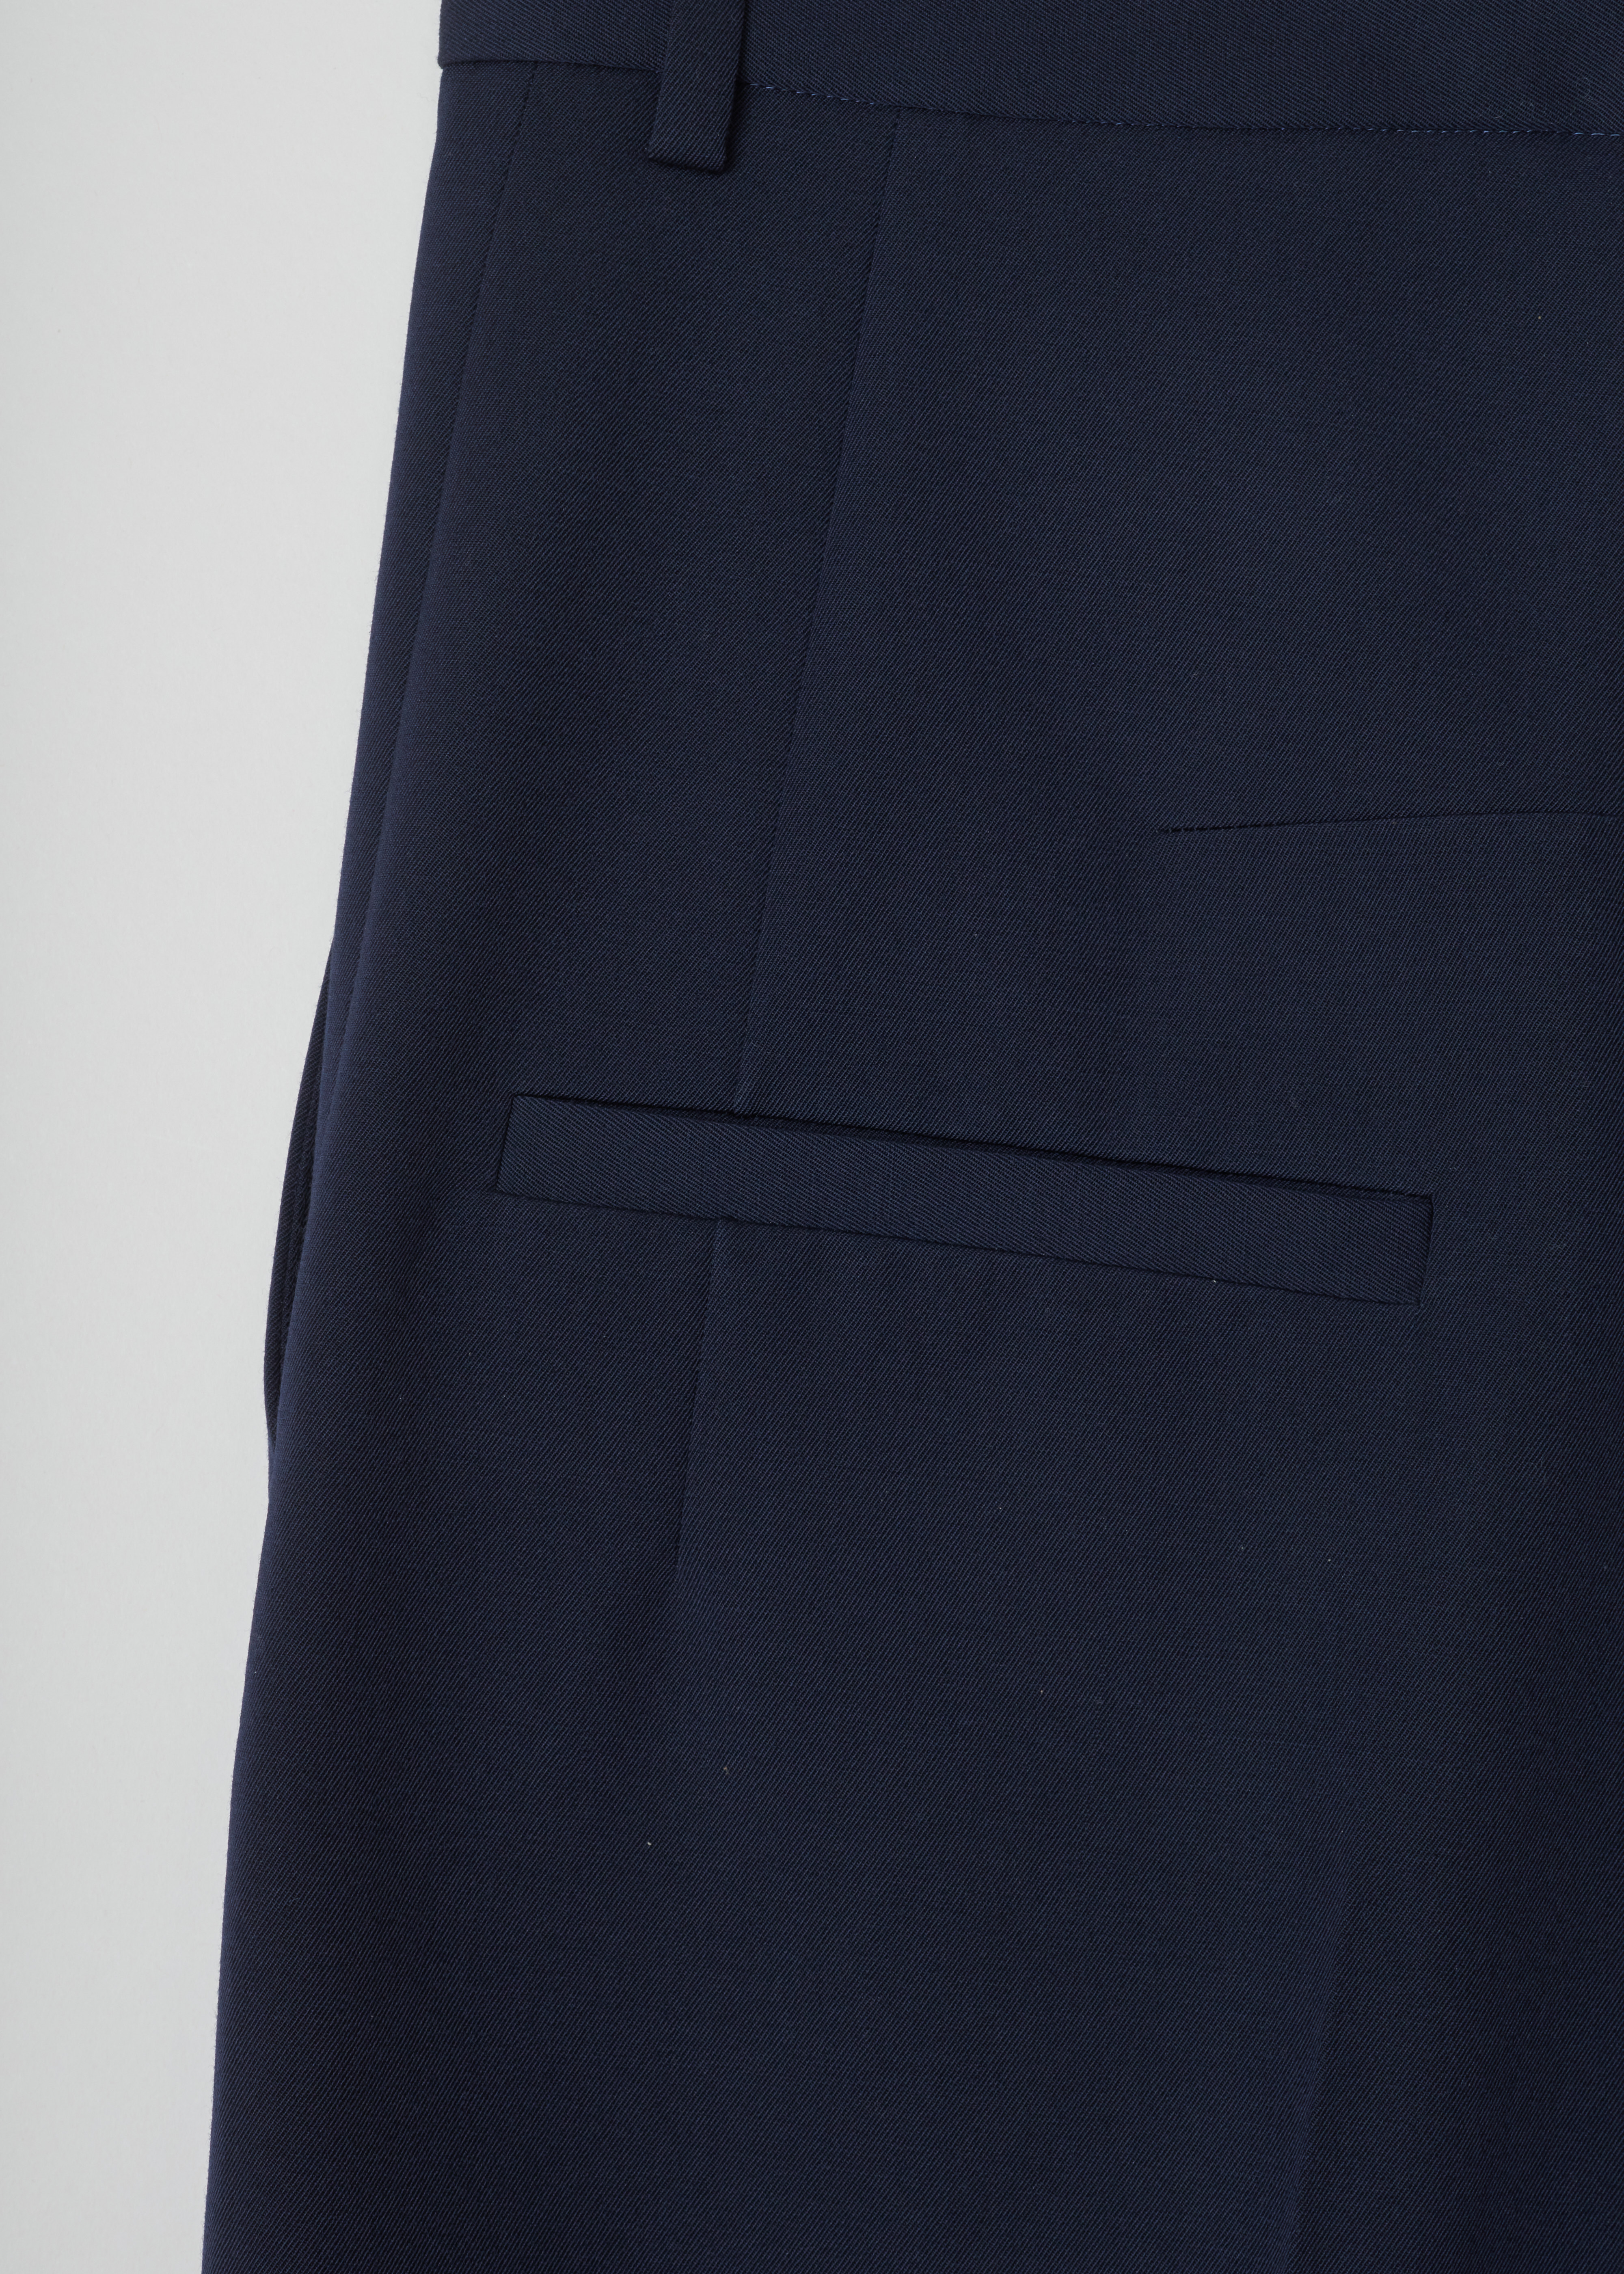 Jil Sander Navy culotte Tancredi_JSWG310331_WG201500_410 navy detail. Woolen culotte with centre creases, belt loops, side pockets and welt pockets on the back.